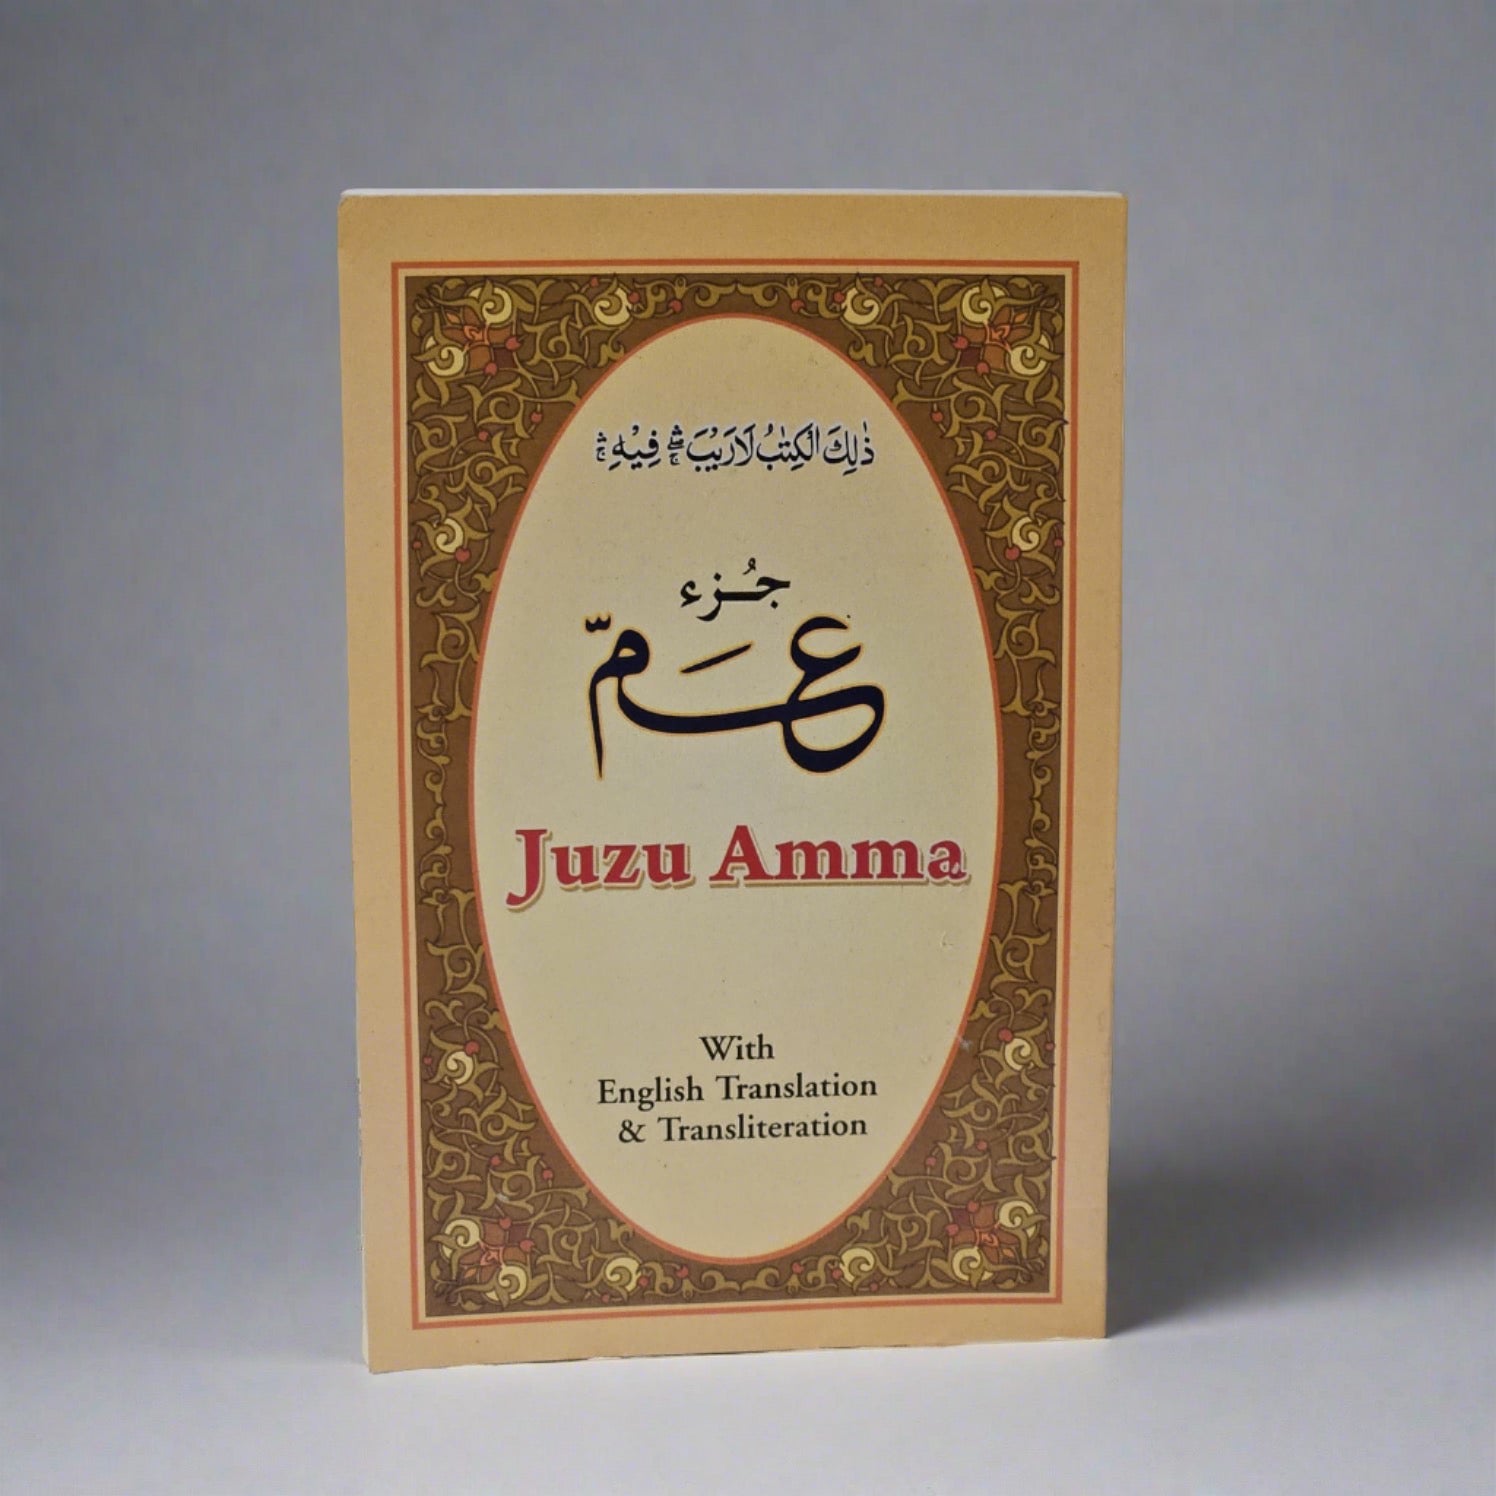 Juzu Amma with English Translation & Transliteration